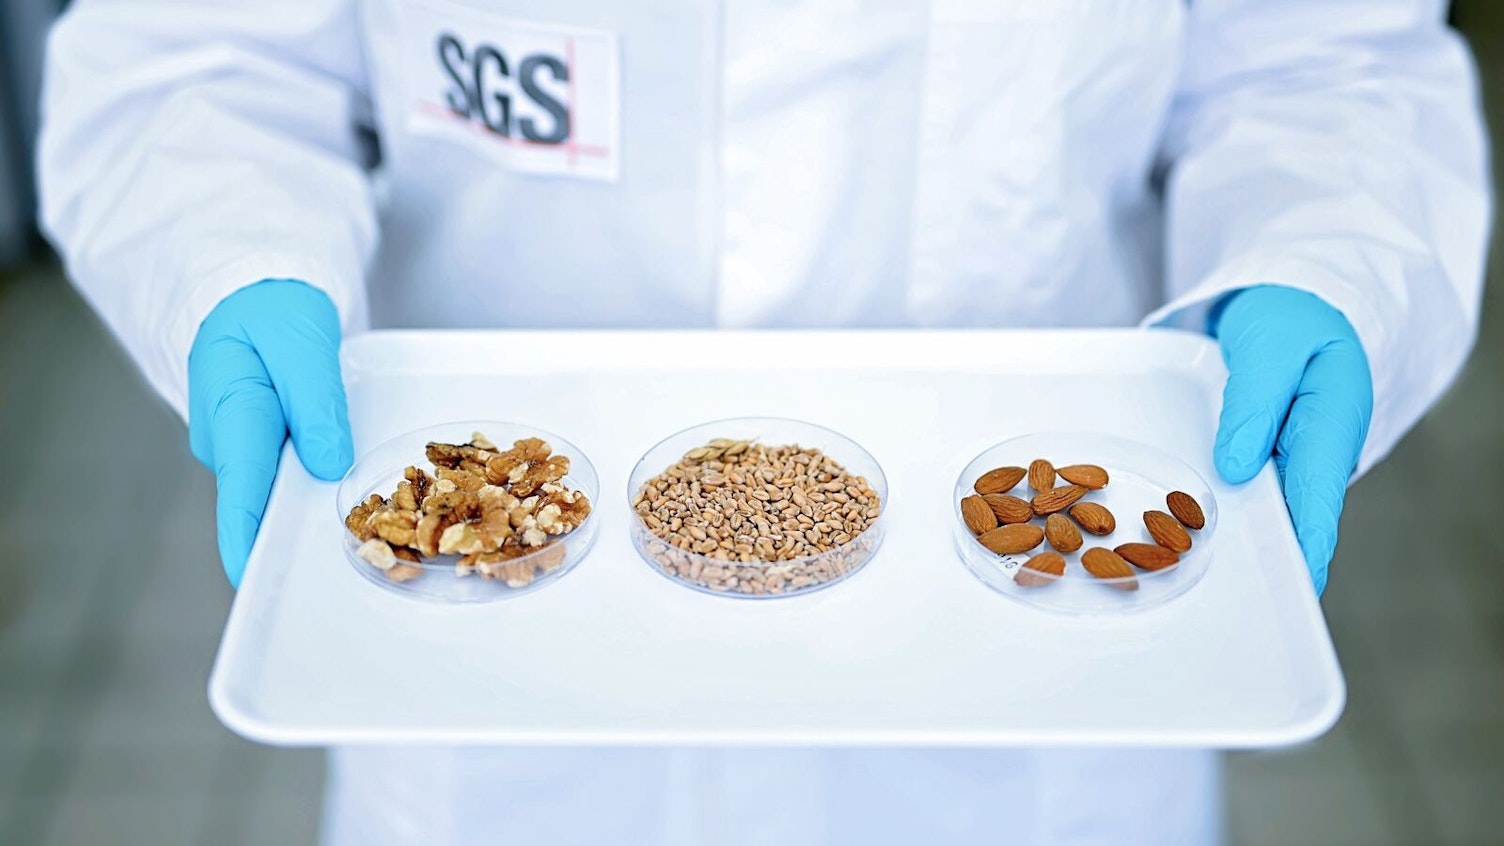 SGS Food Lab Testing Services Hamburg Germany 1